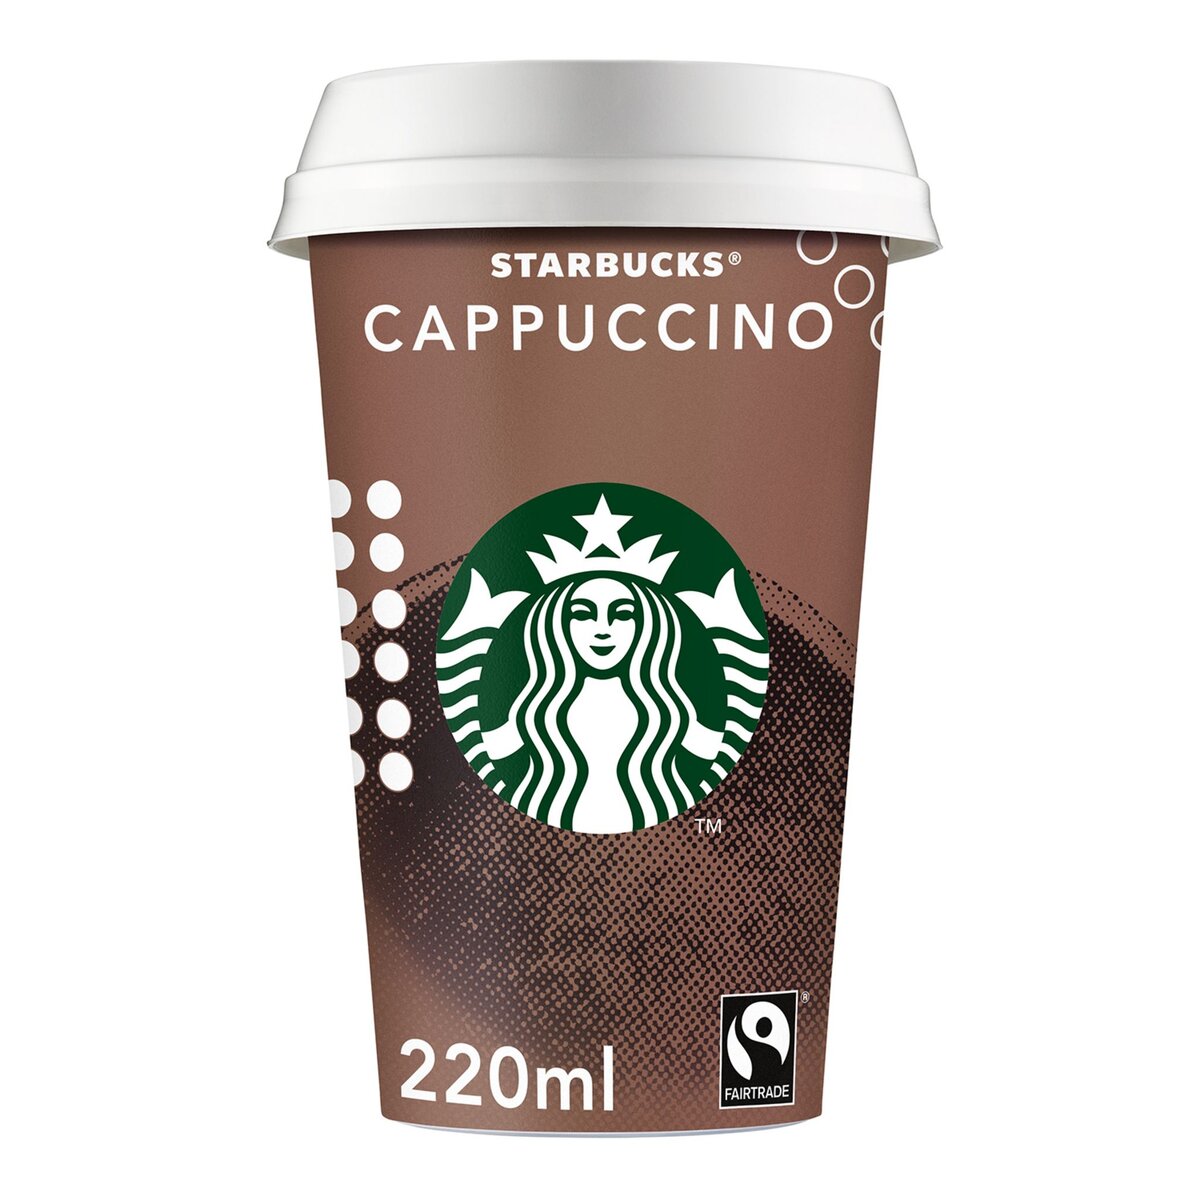 STARBUCKS Cappuccino - Boisson lactée au café arabica 220ml